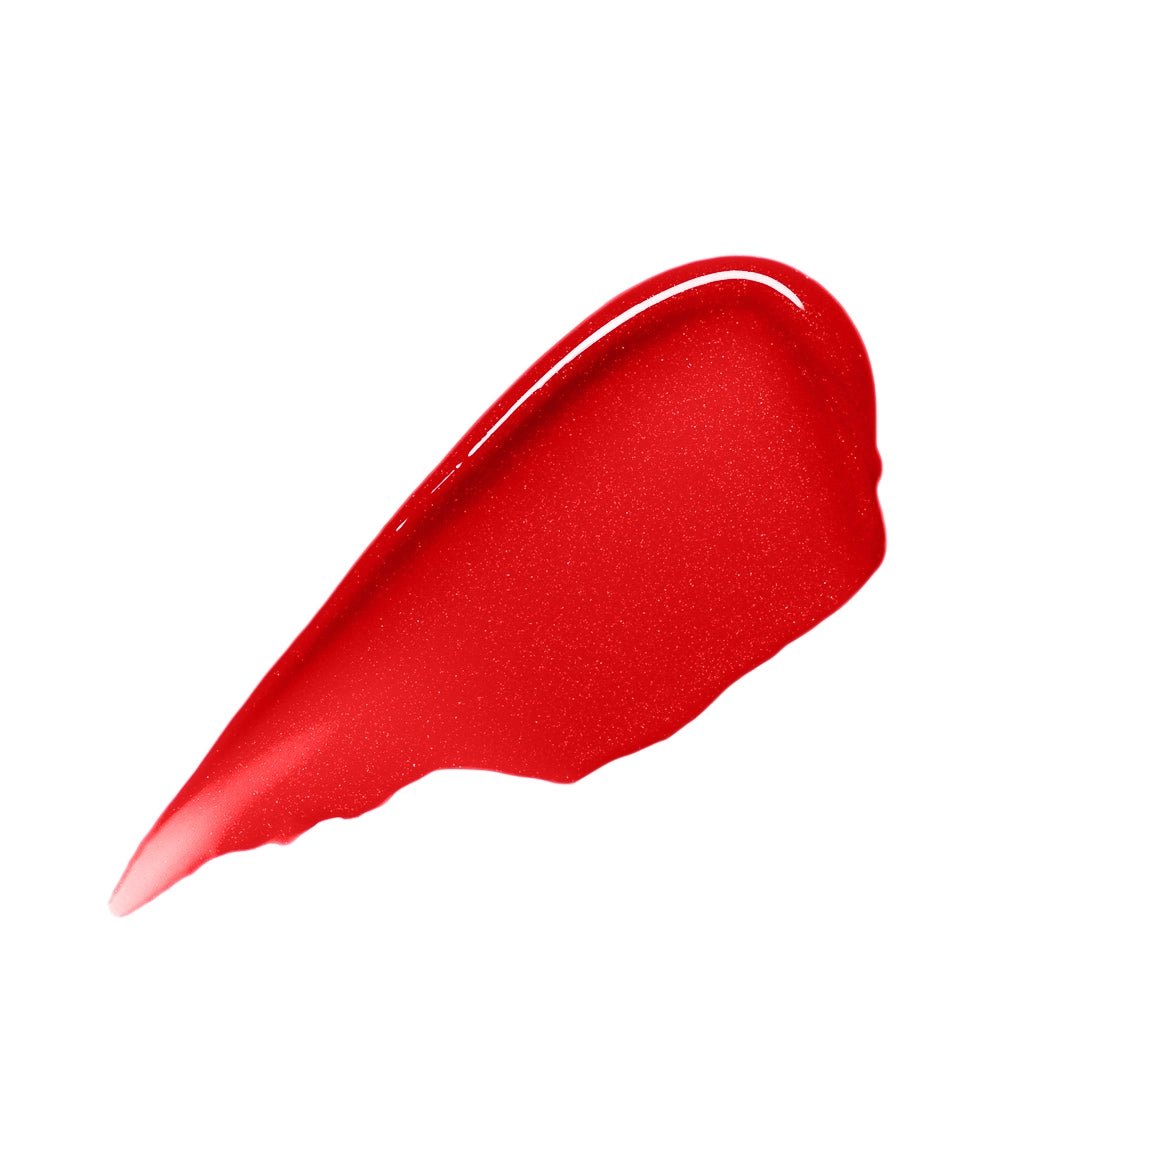 The Cherry Slip One Luxe Gloss